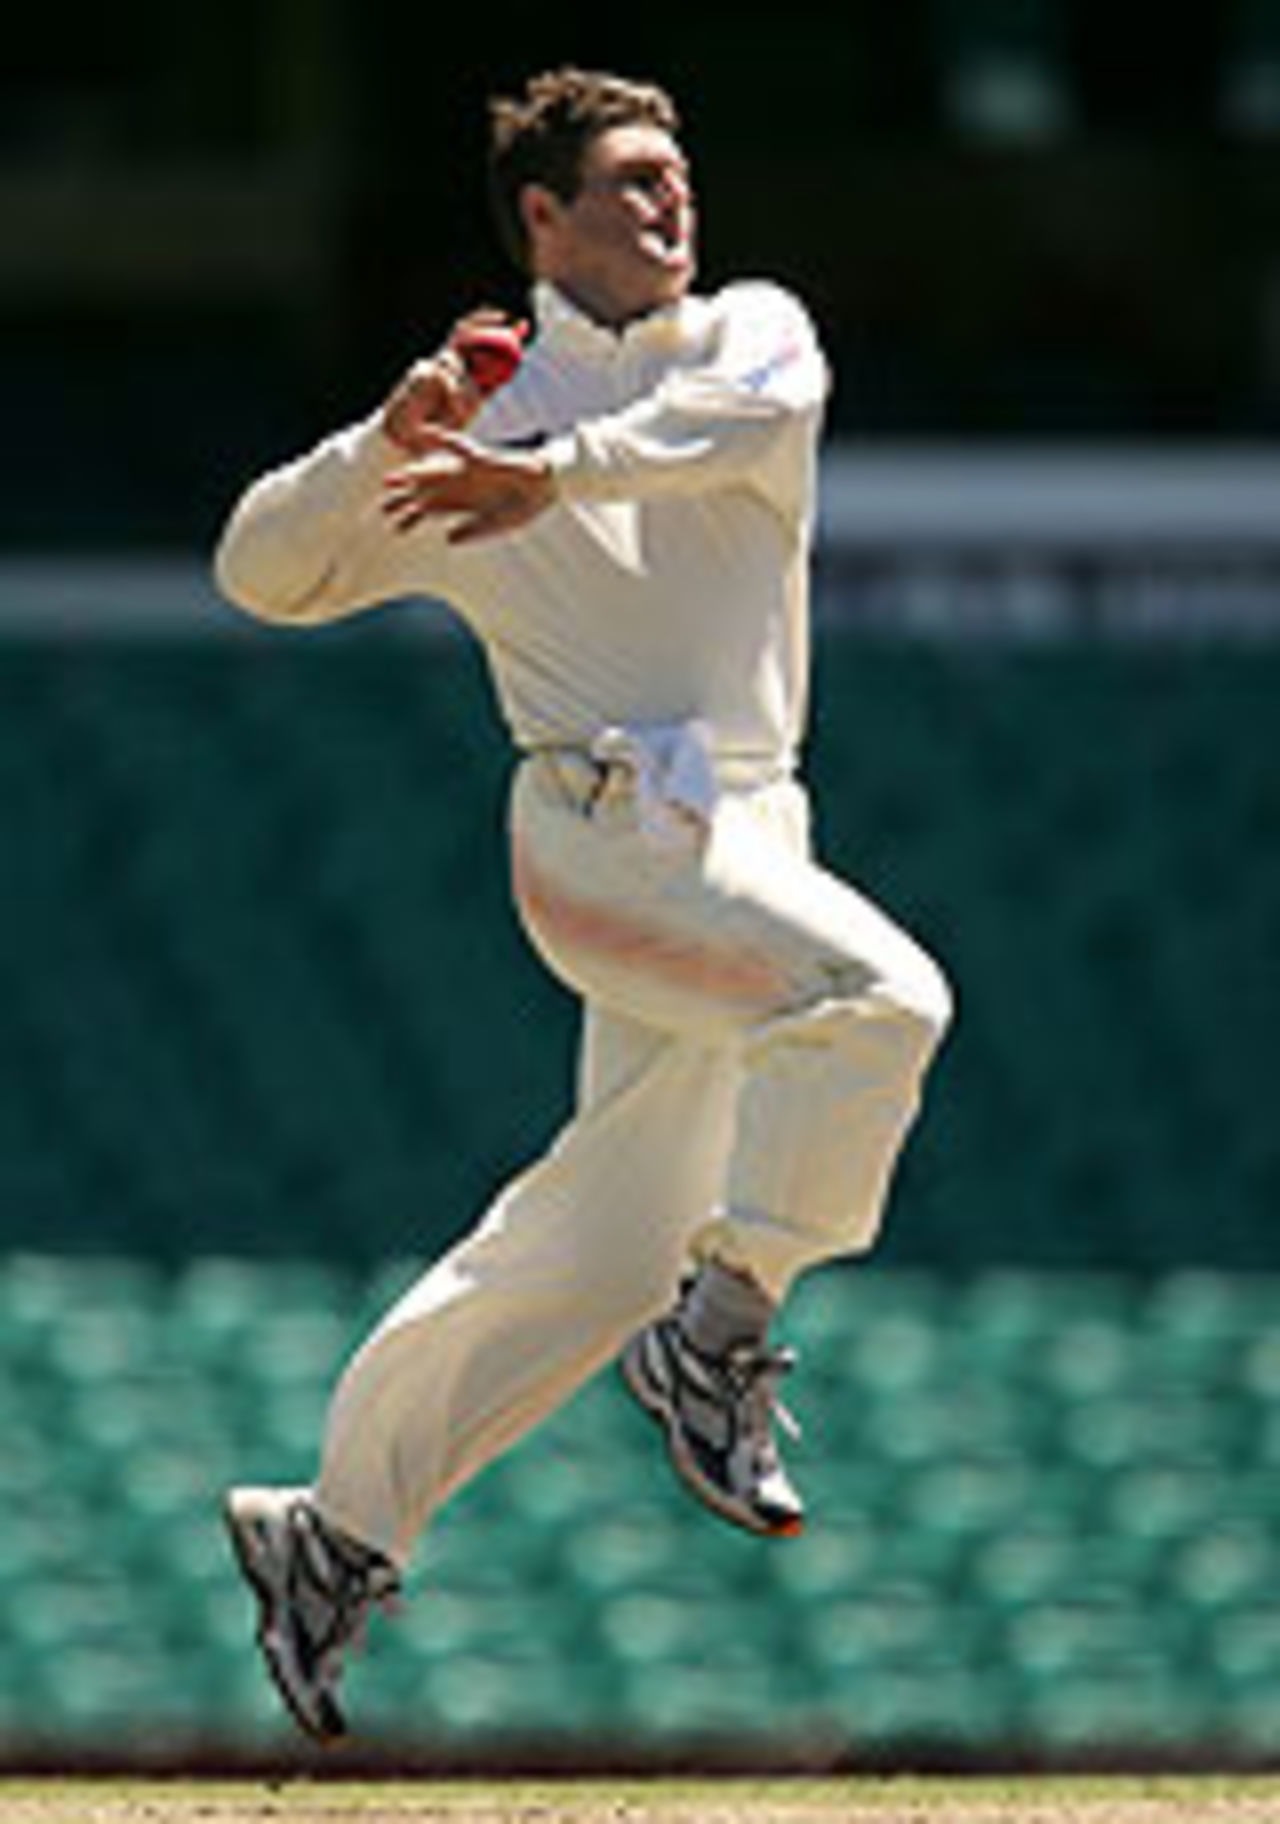 Stuart MacGill demolished the New Zealand innings, New South Wales v New Zealanders, SCG, November 13 2004